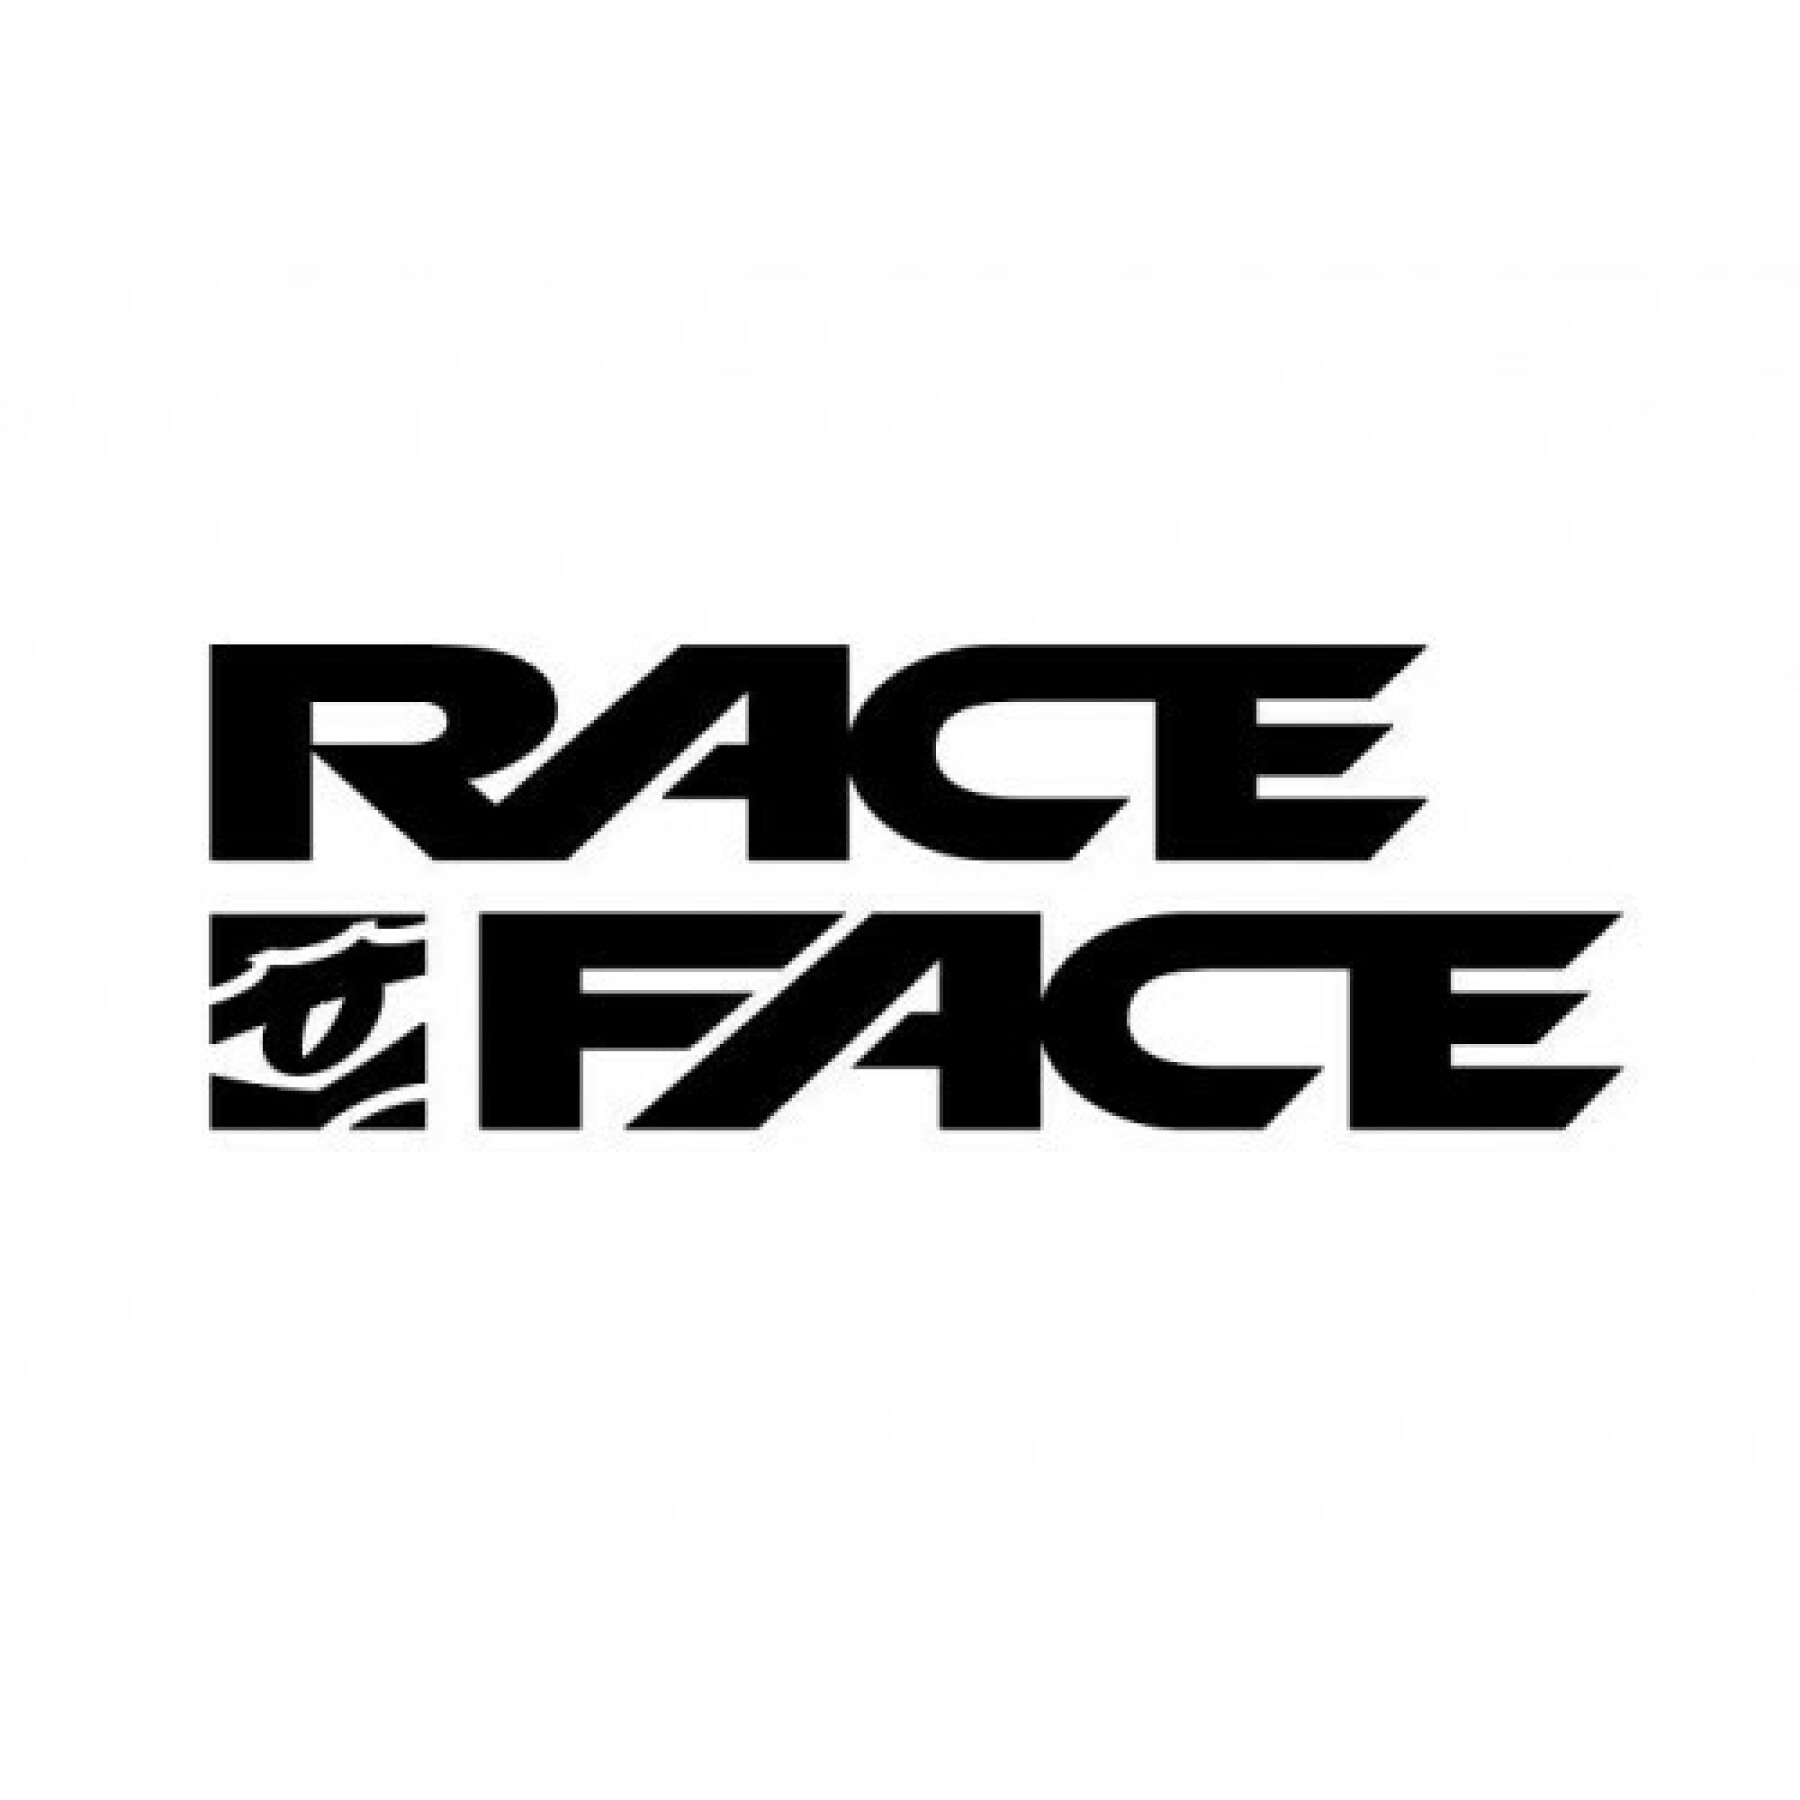 Felge Race Face arc offset - 25 - 27.5 - 32t